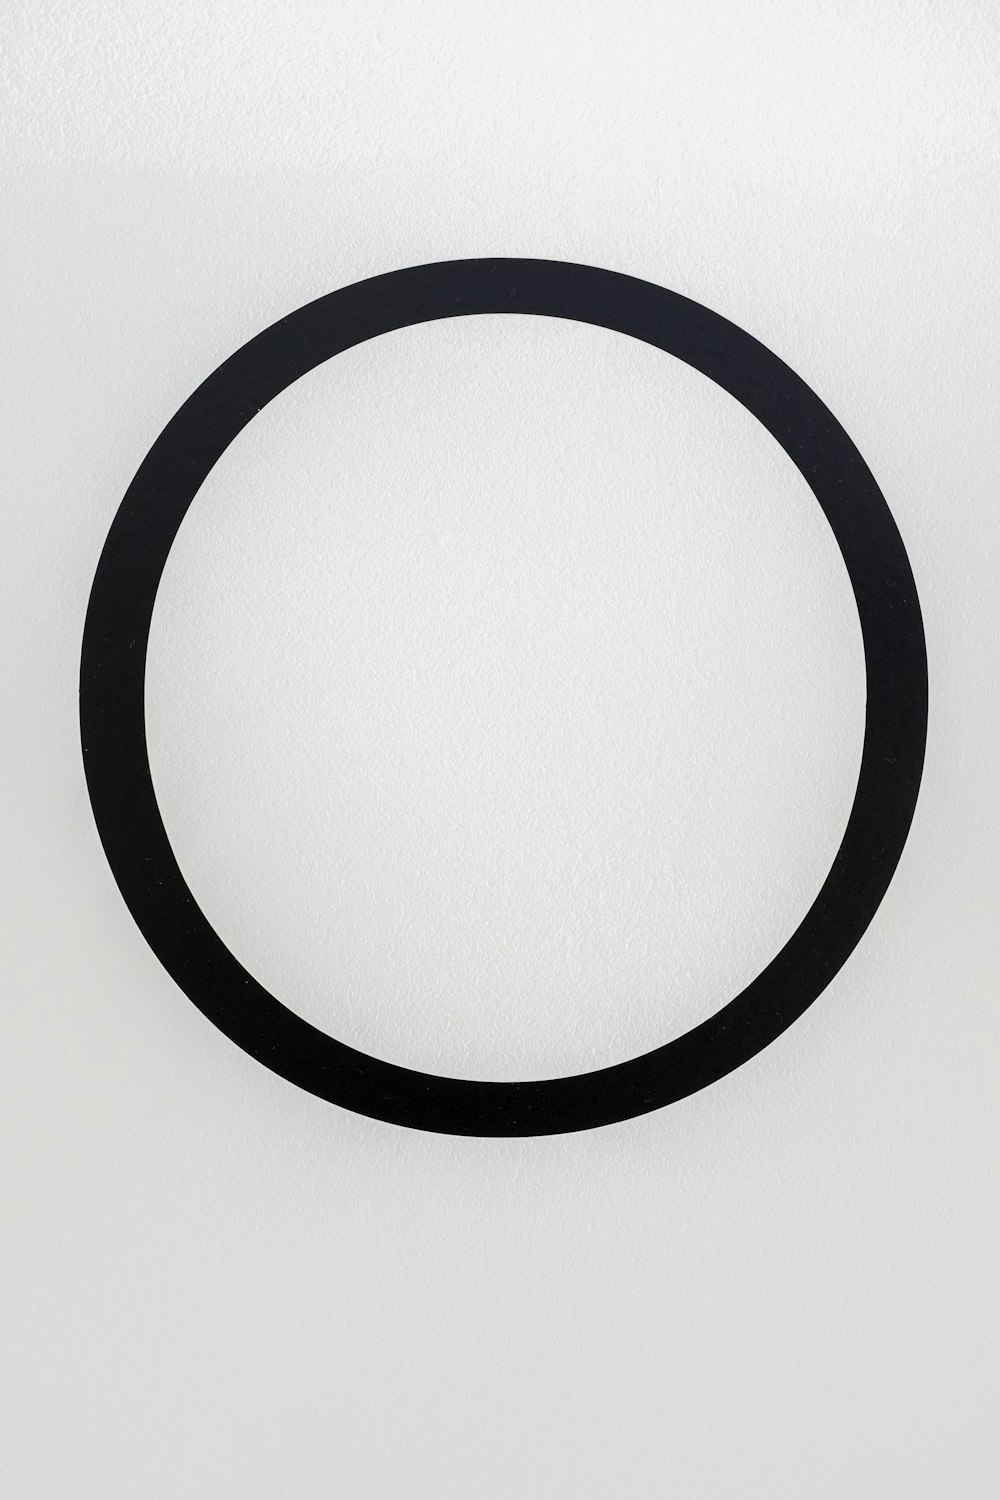 black round frame on white surface